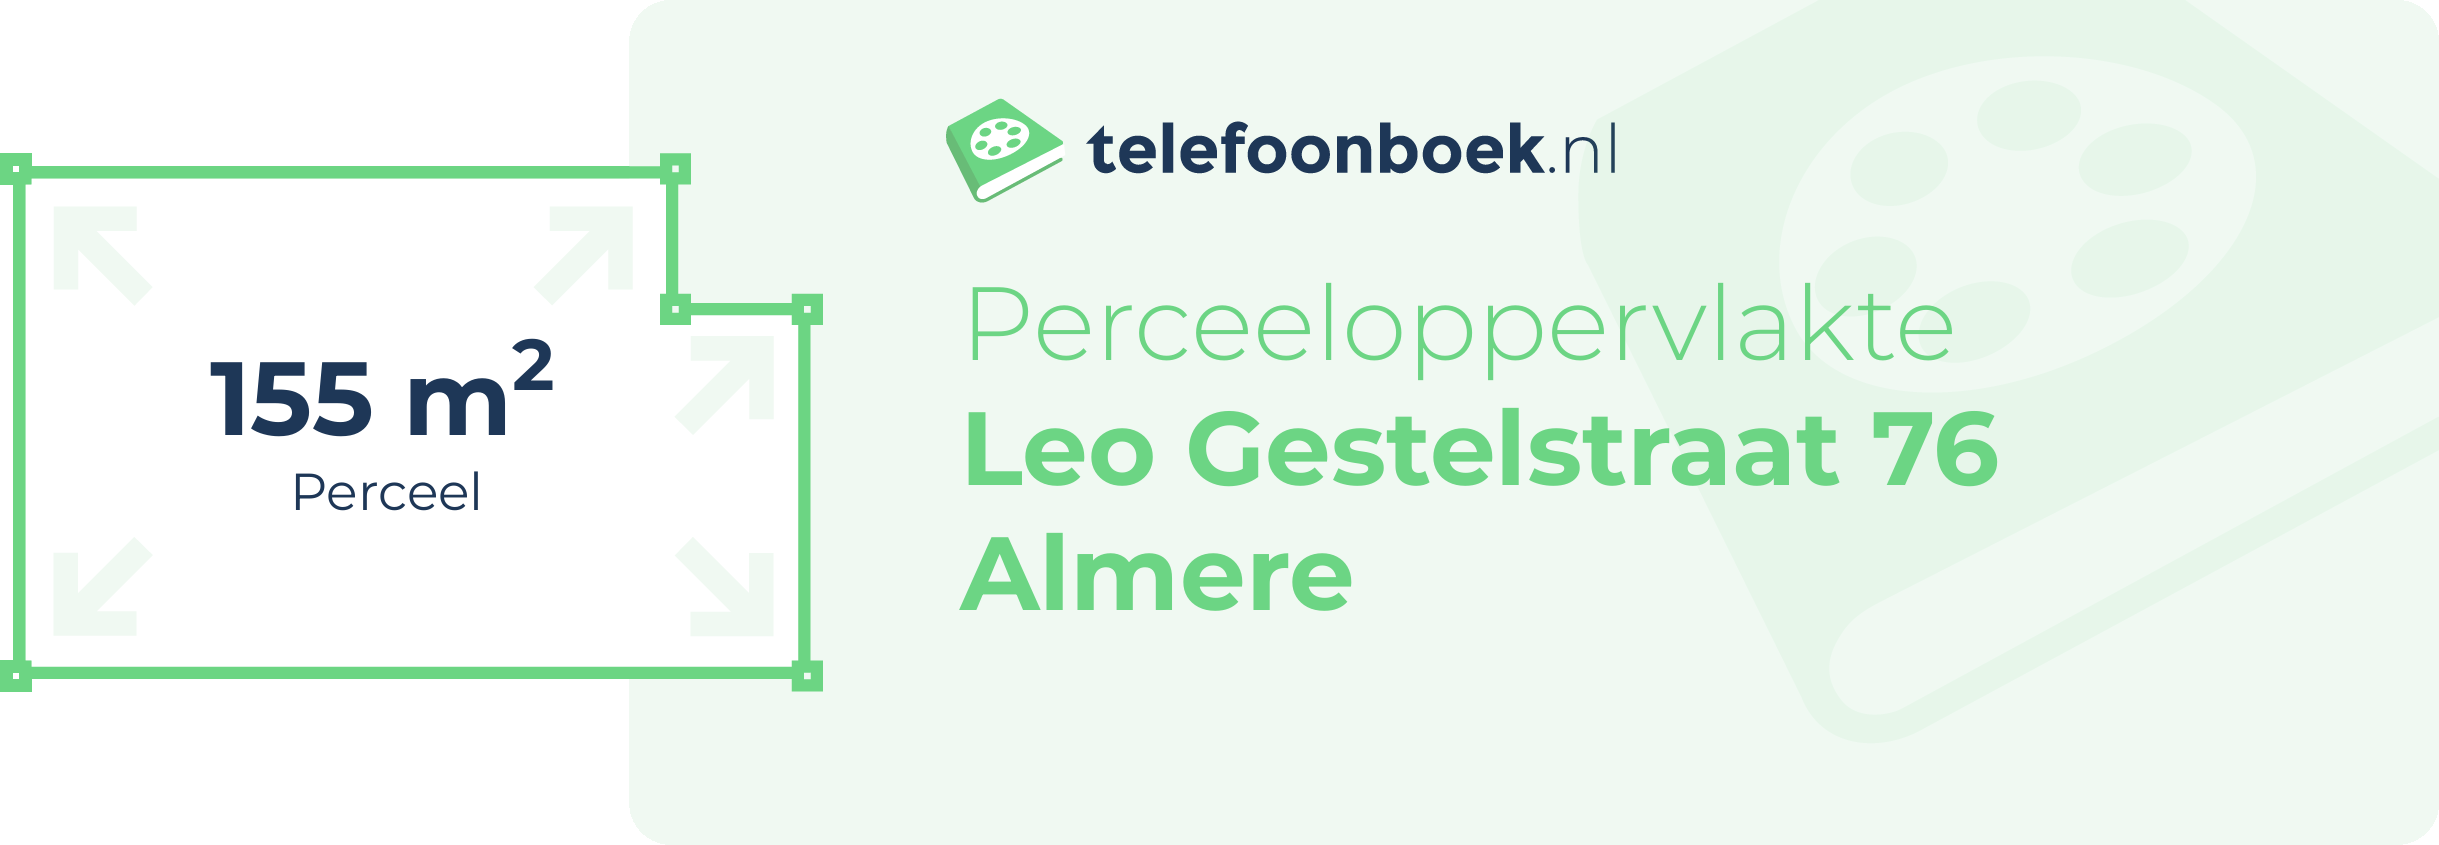 Perceeloppervlakte Leo Gestelstraat 76 Almere